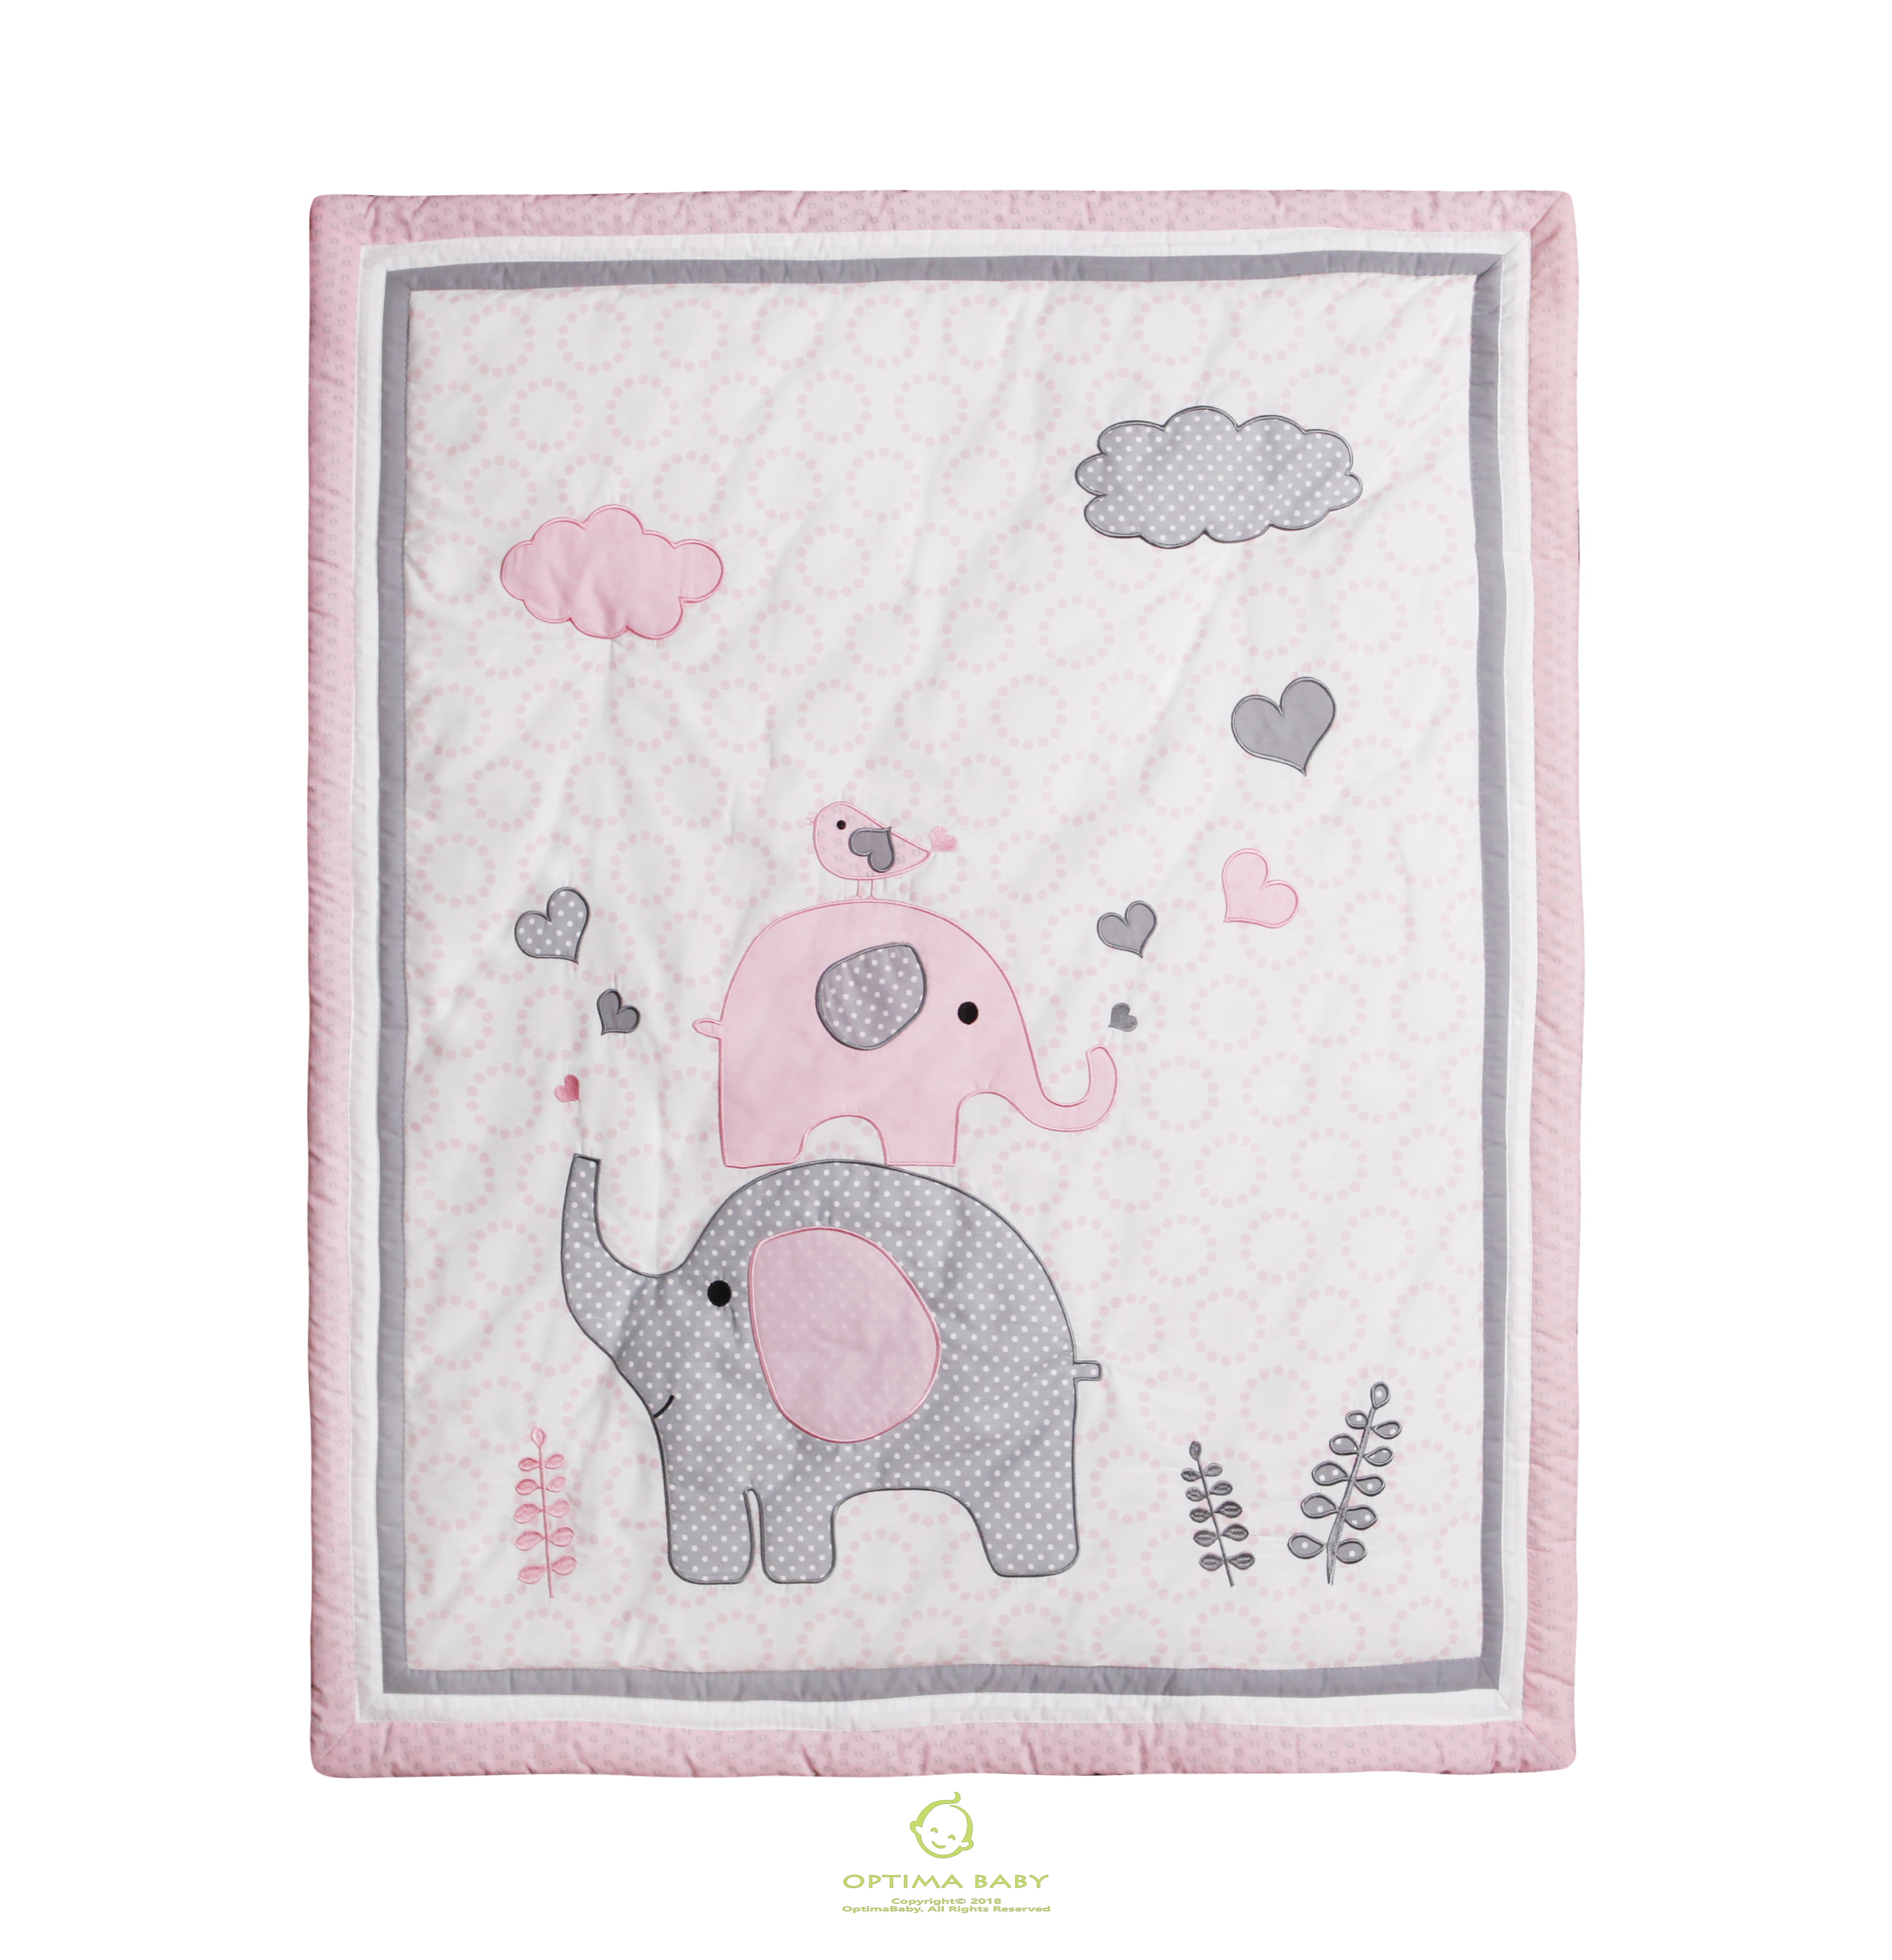 Bumperless 5 Pieces OptimaBaby Pink Grey Elephant Baby Nursery Crib Bedding Set 